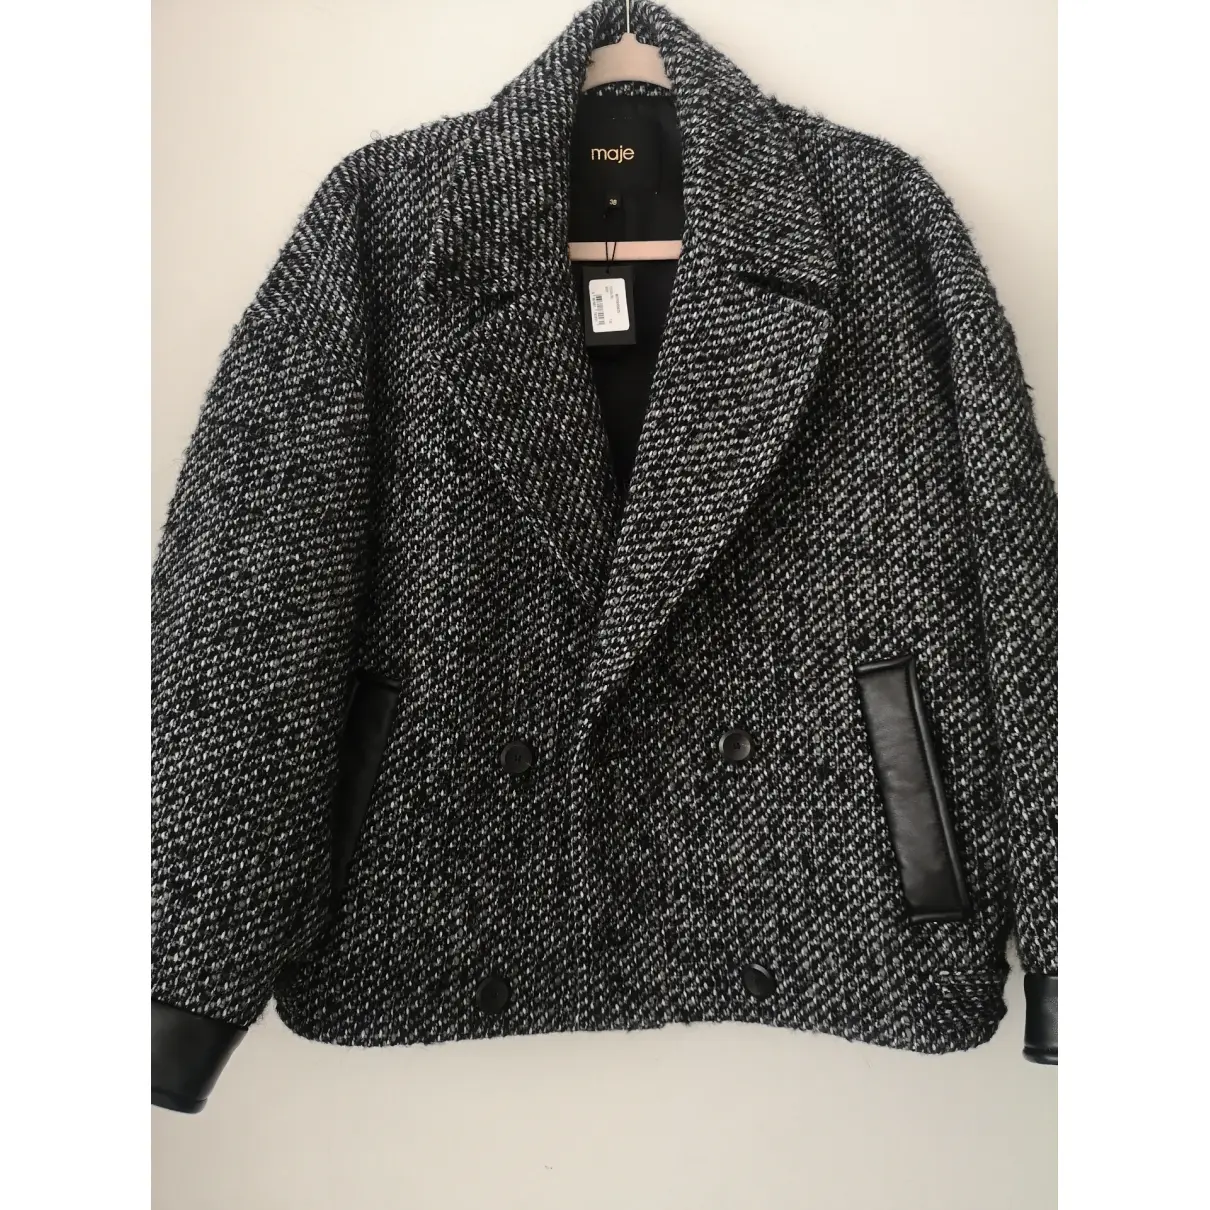 Buy Maje Fall Winter 2020 tweed jacket online